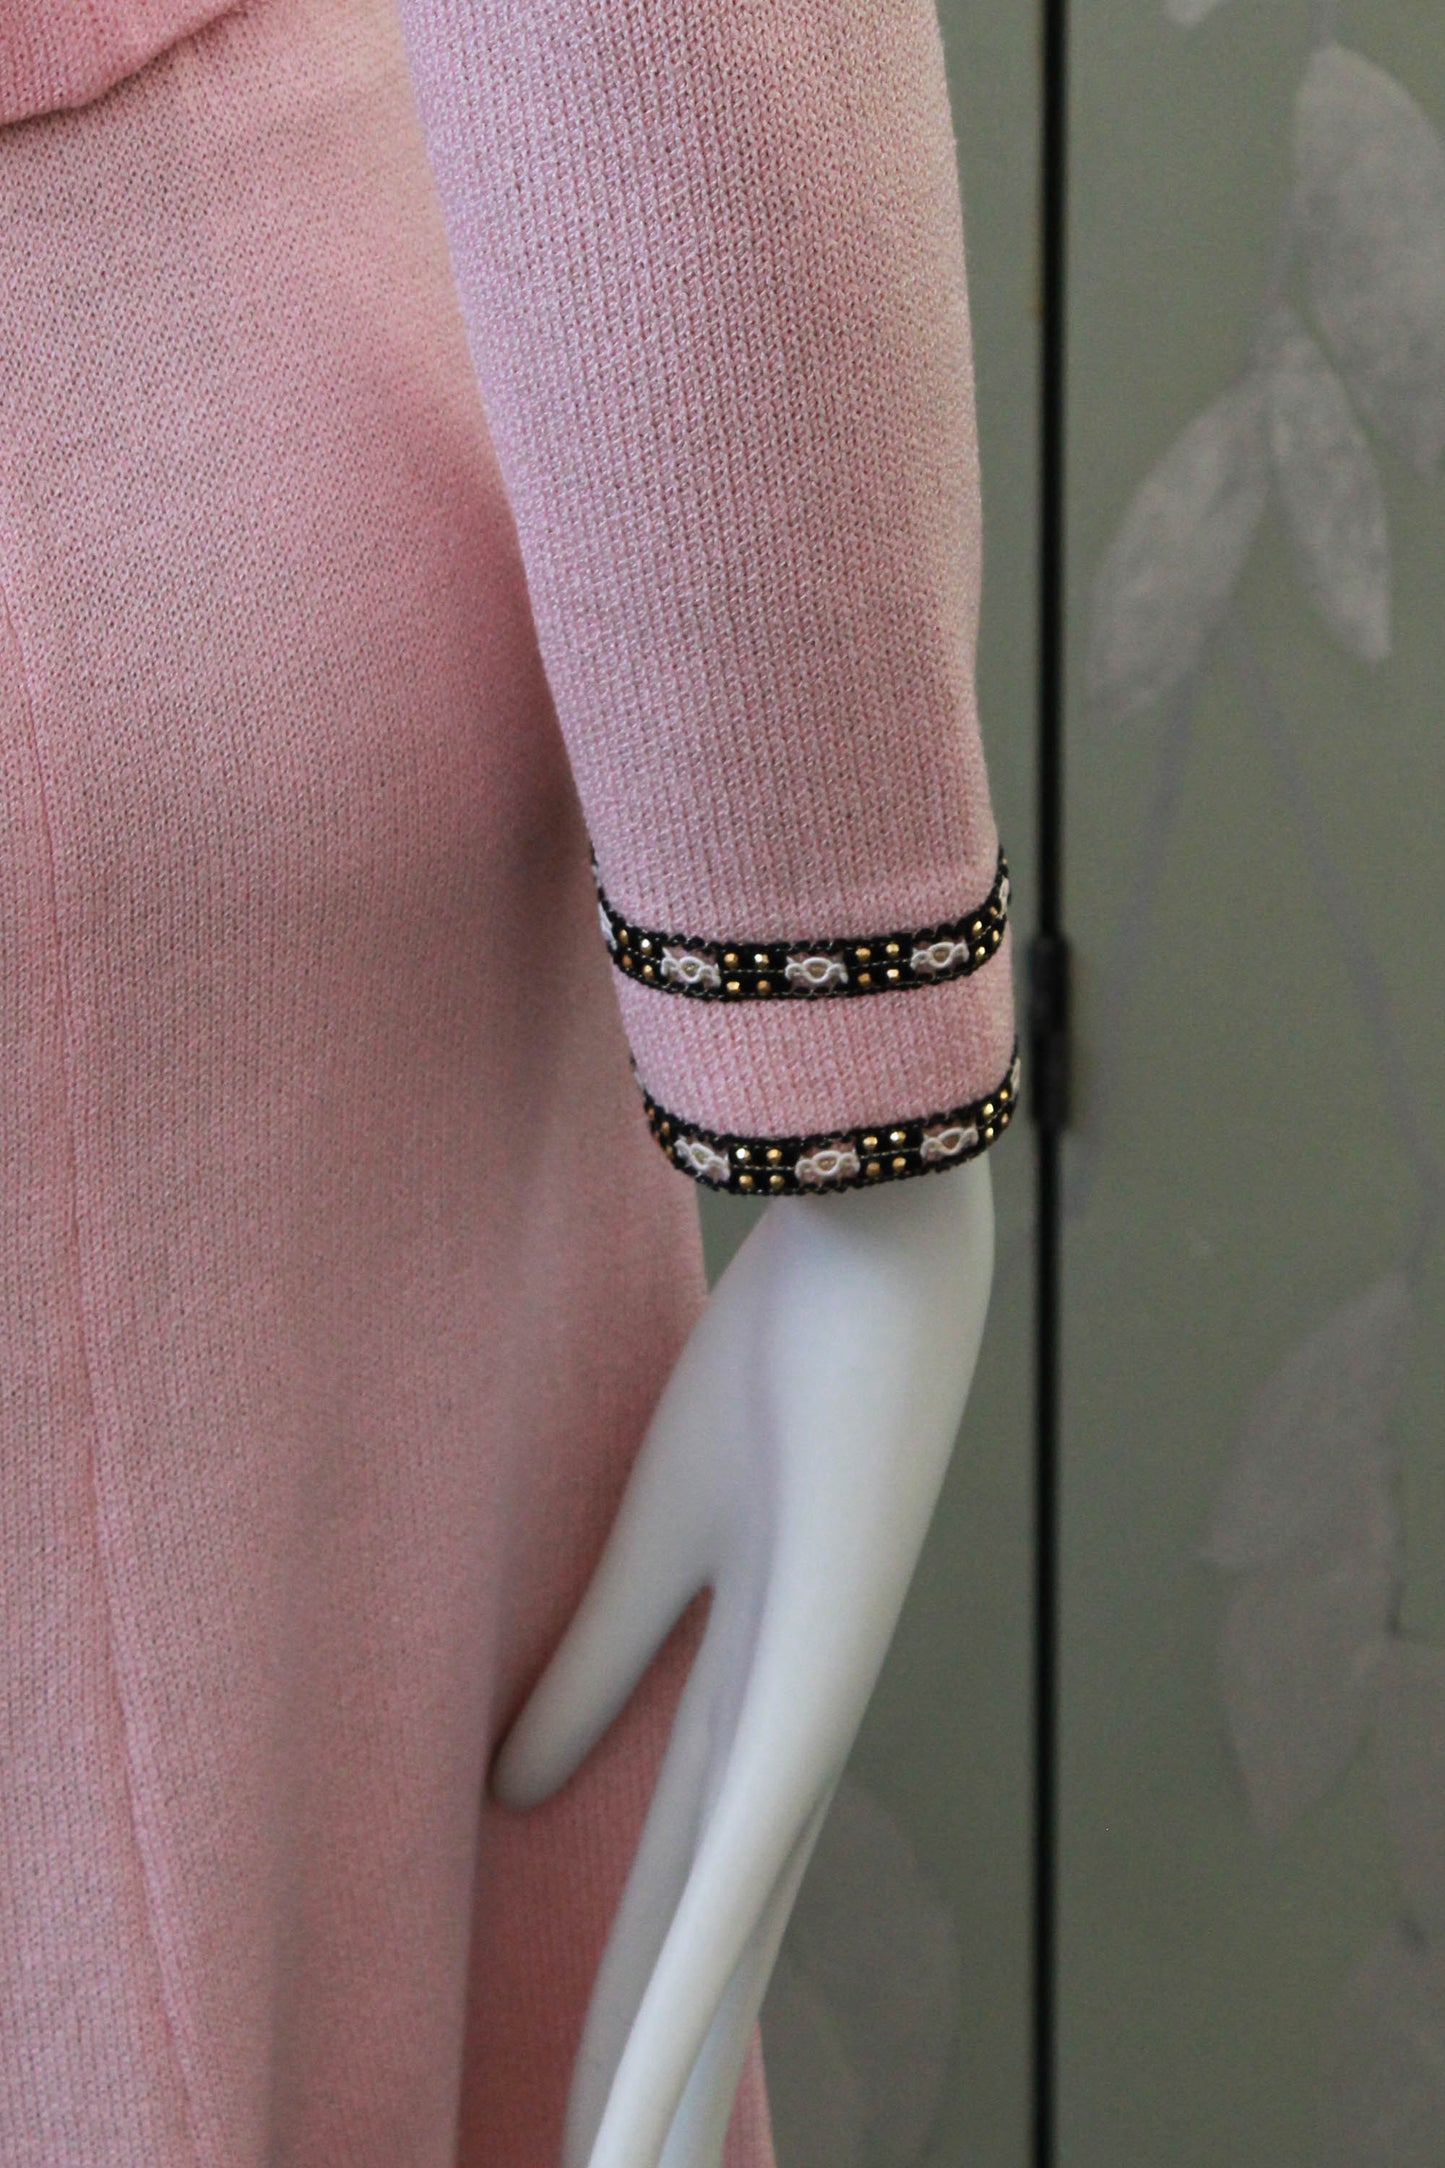 90s St. John's Knit Pink Jacket and Skirt Set, Small